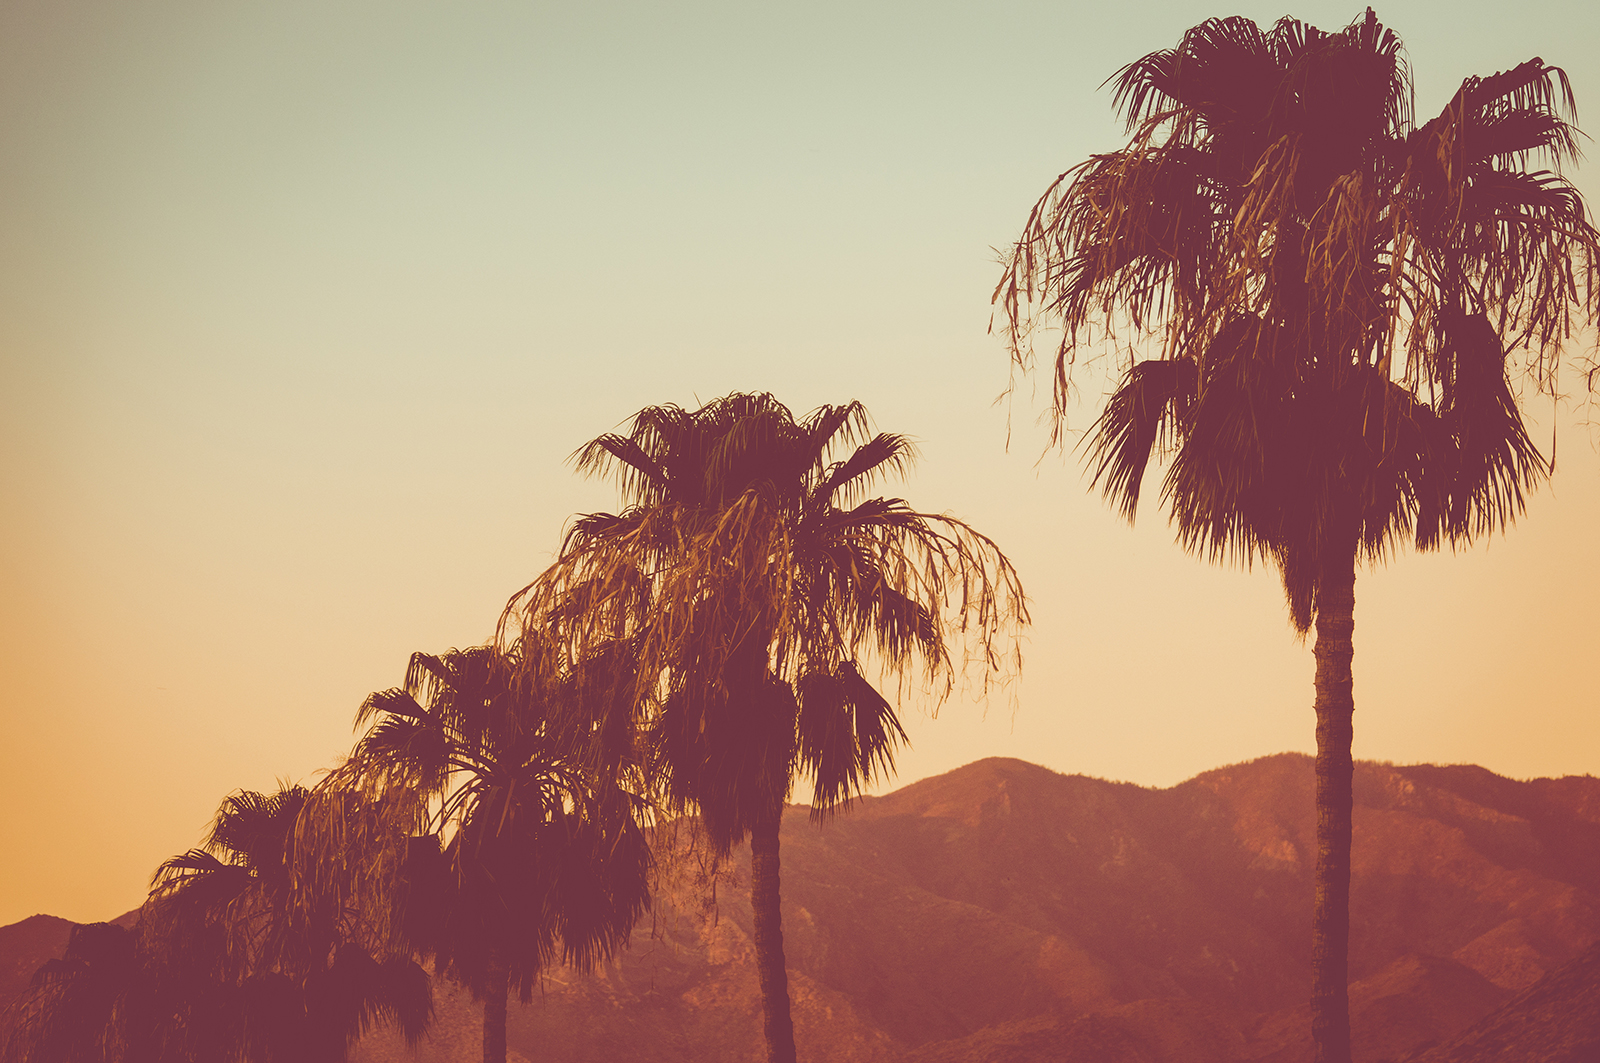 Coachella Valley Palm Trees